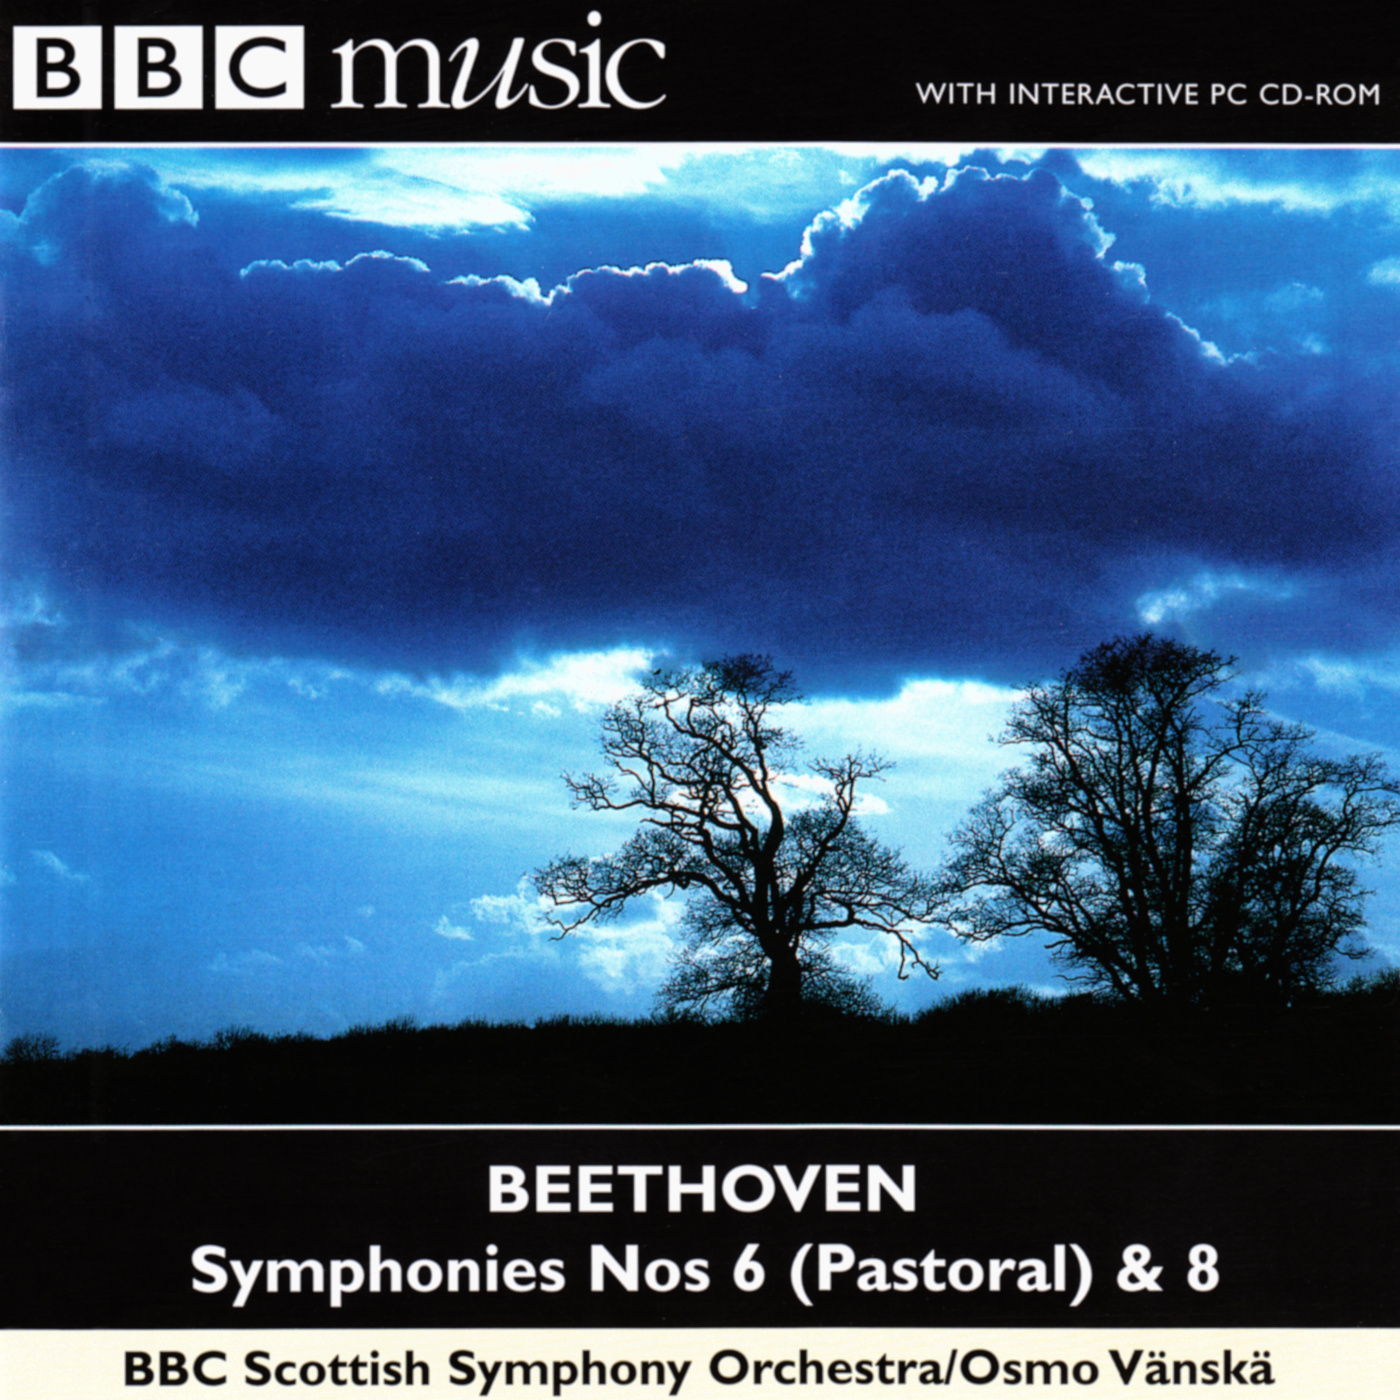 Beethoven Symphonies 6 & 8